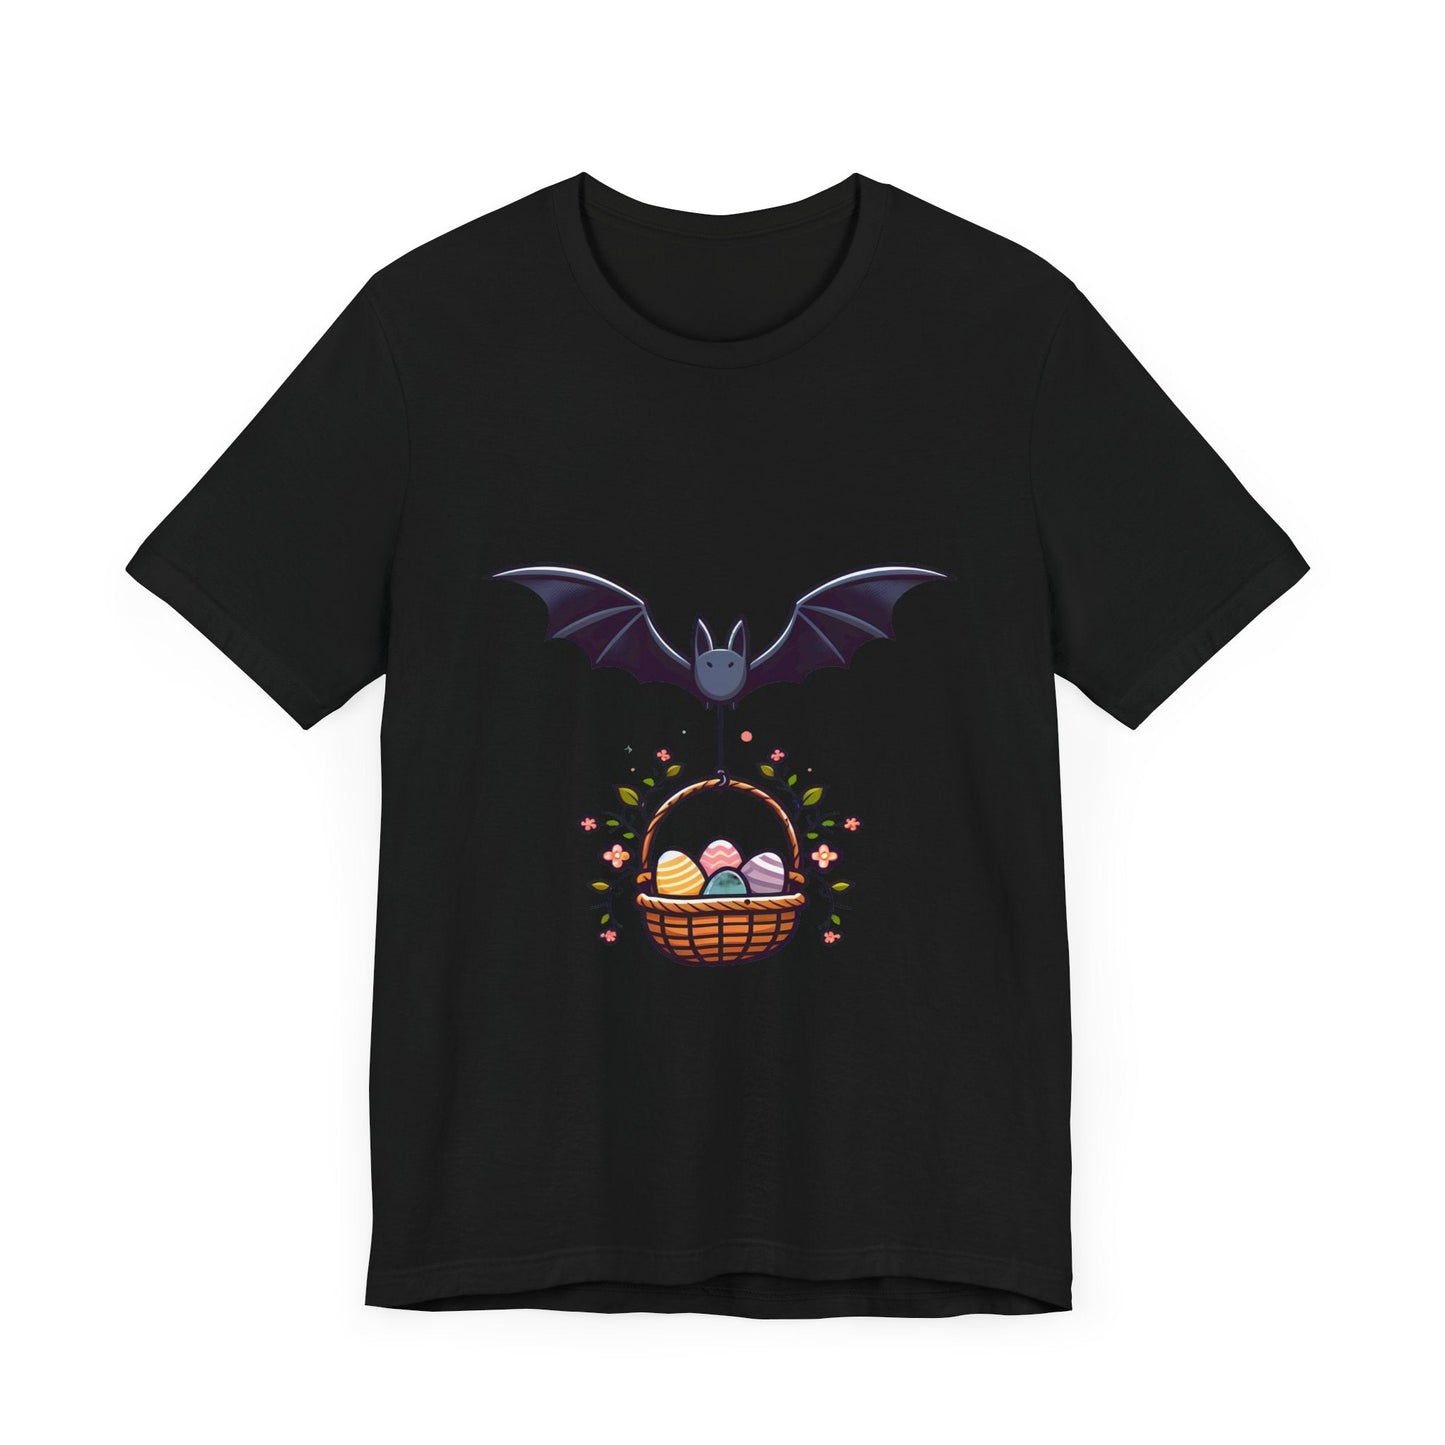 Bat With Easter Basket Short Sleeve Tee ShirtT - ShirtVTZdesignsBlackXSbatsCottonCrew neck